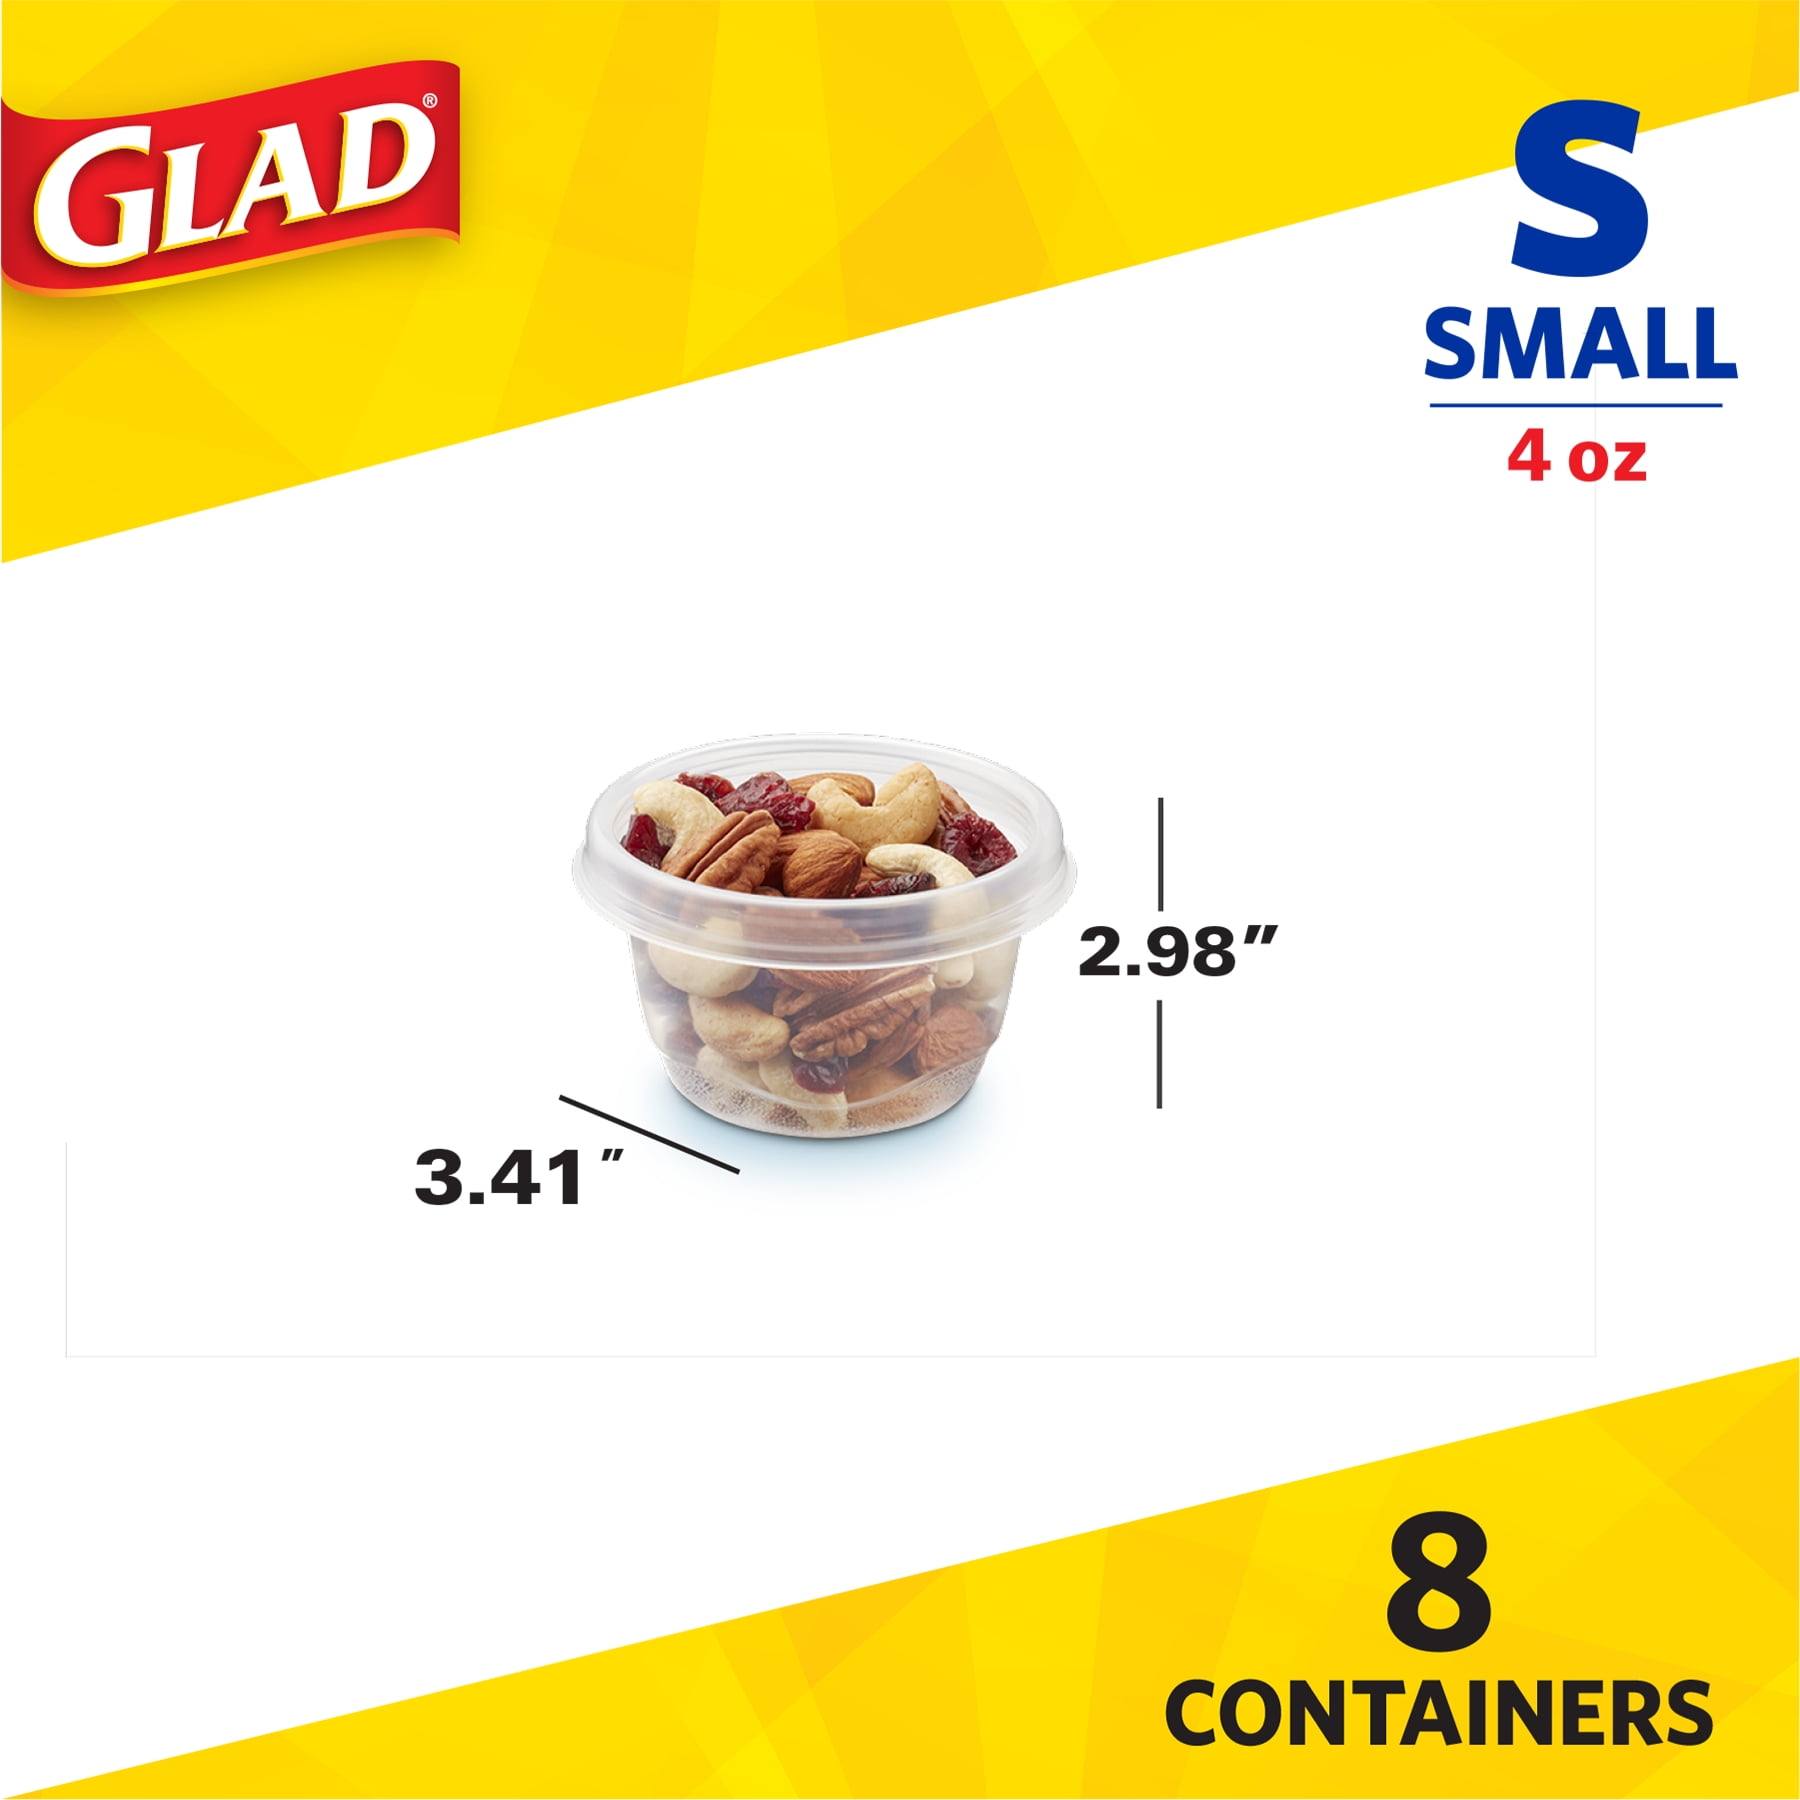 Gladware Lockware To Go Food Storage Containers | Glad Medium Size Round  Food Storage That Holds up …See more Gladware Lockware To Go Food Storage